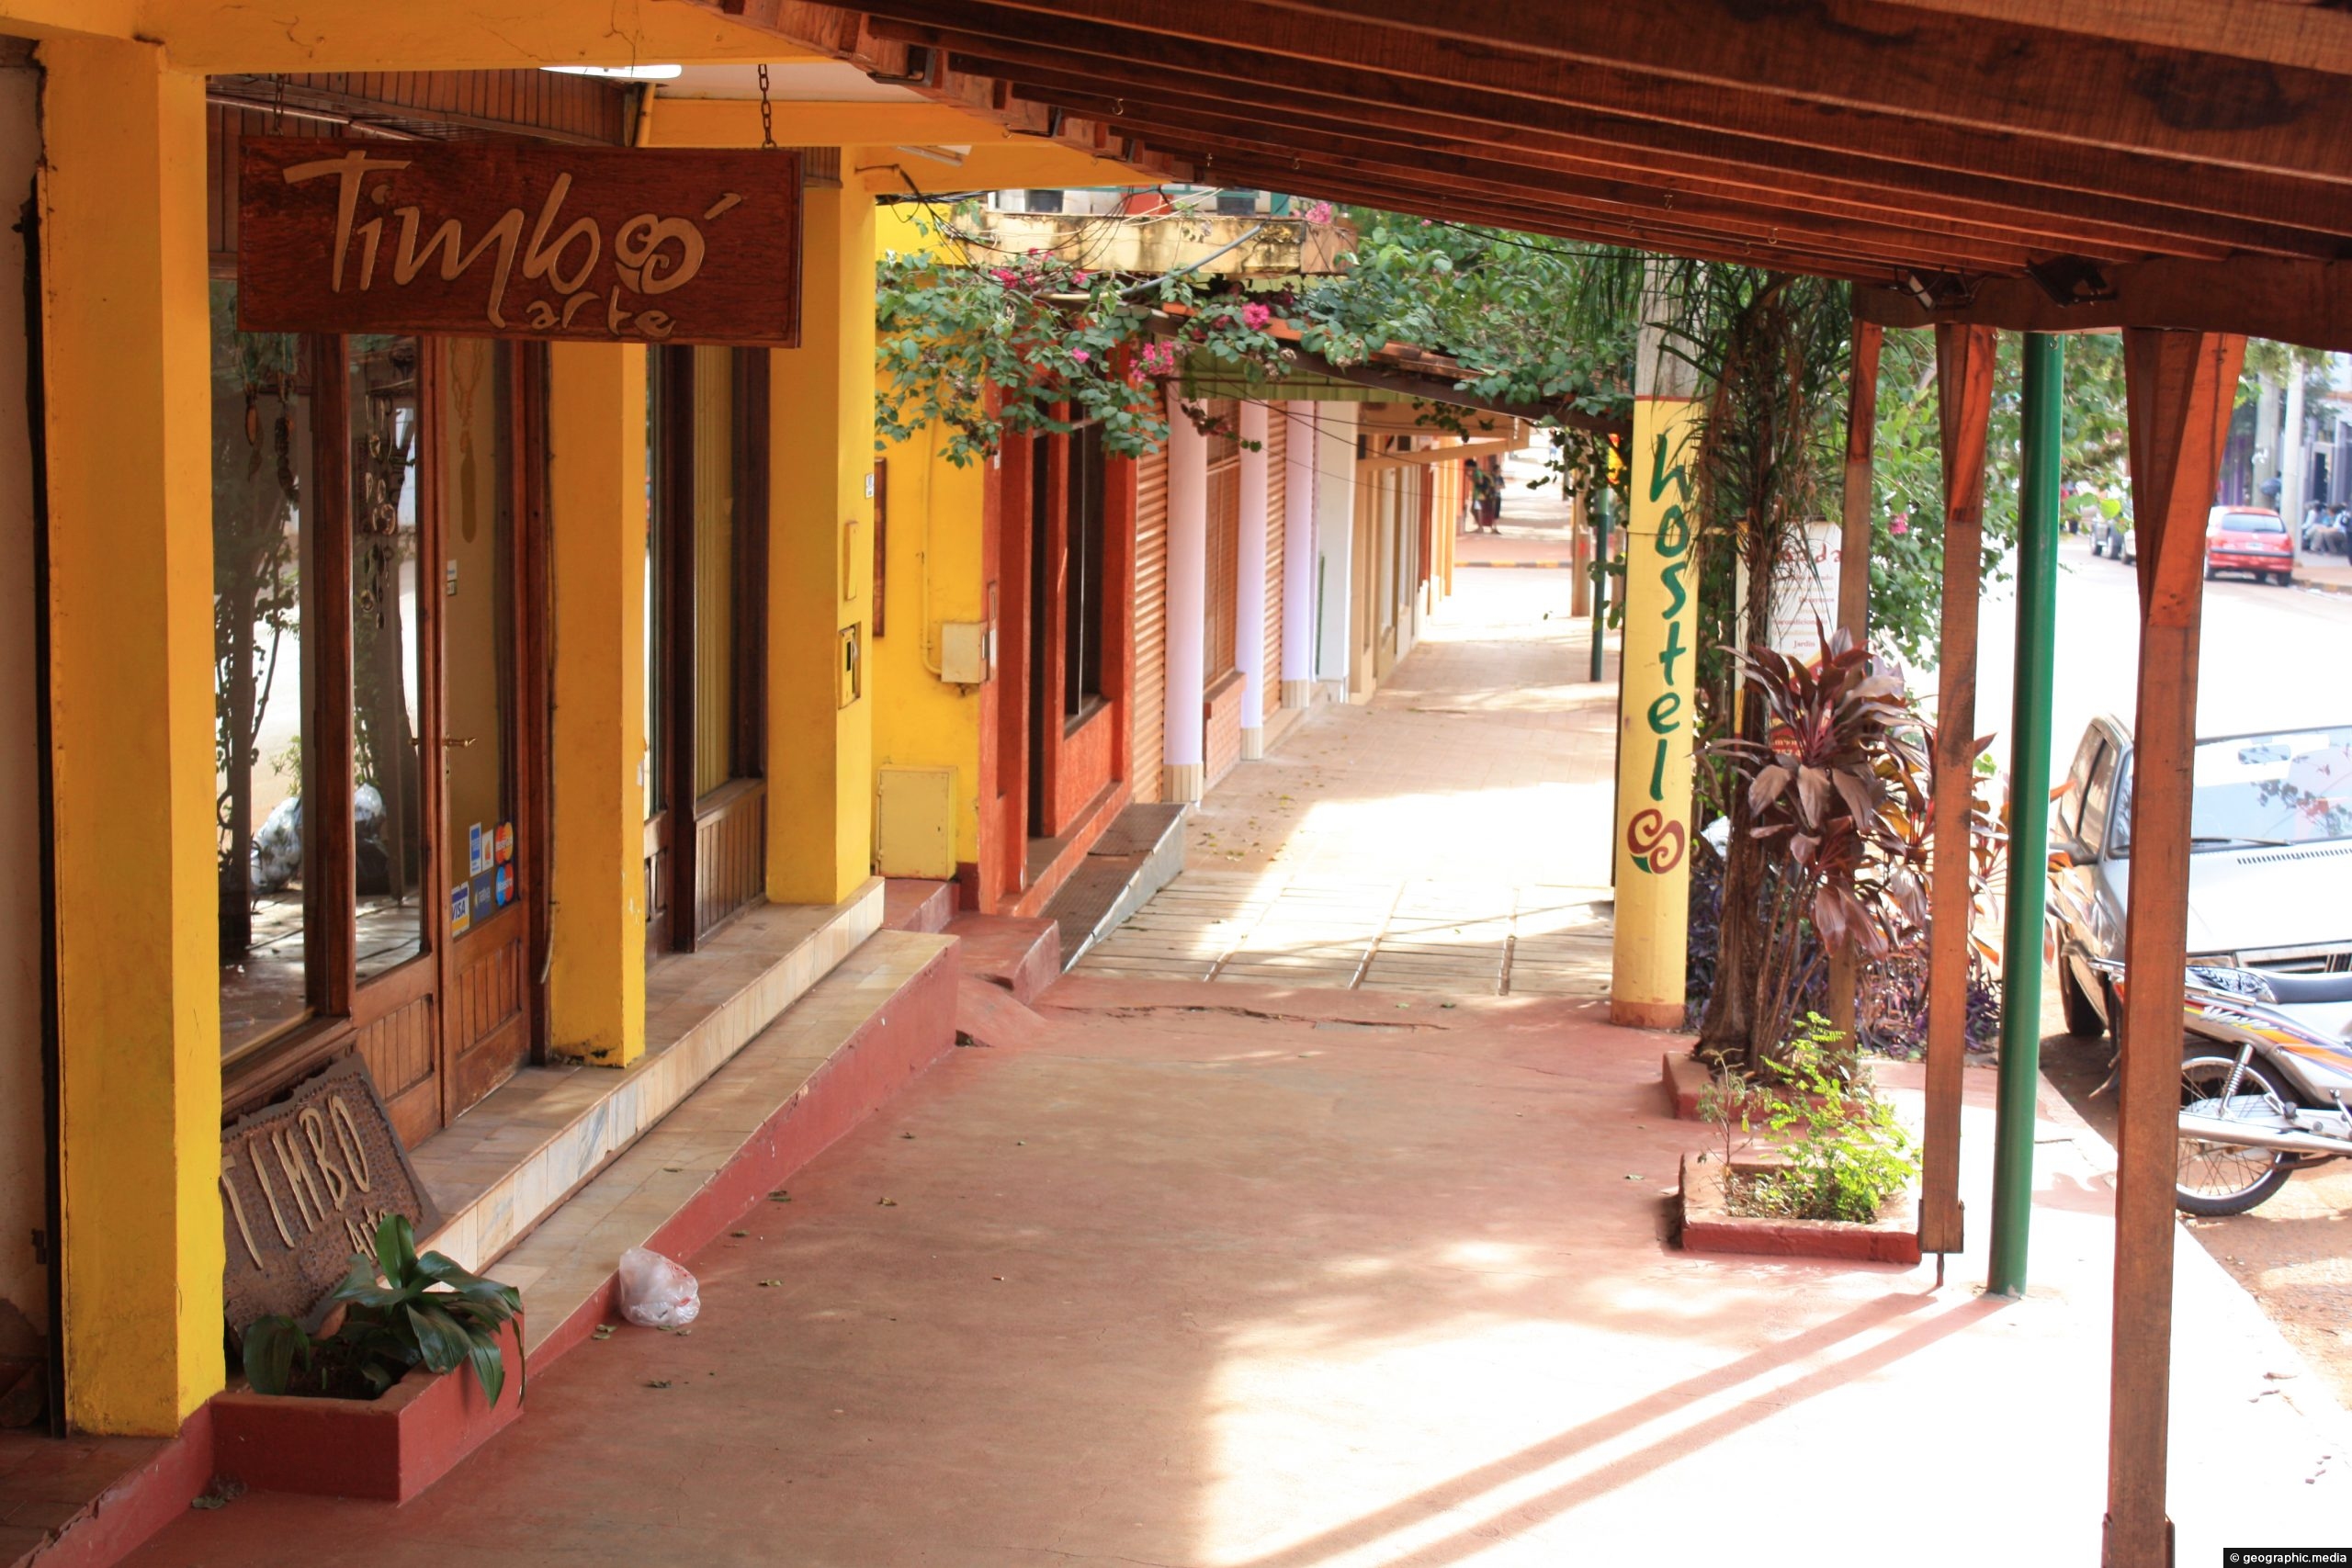 Typical street in Puerto Iguazú